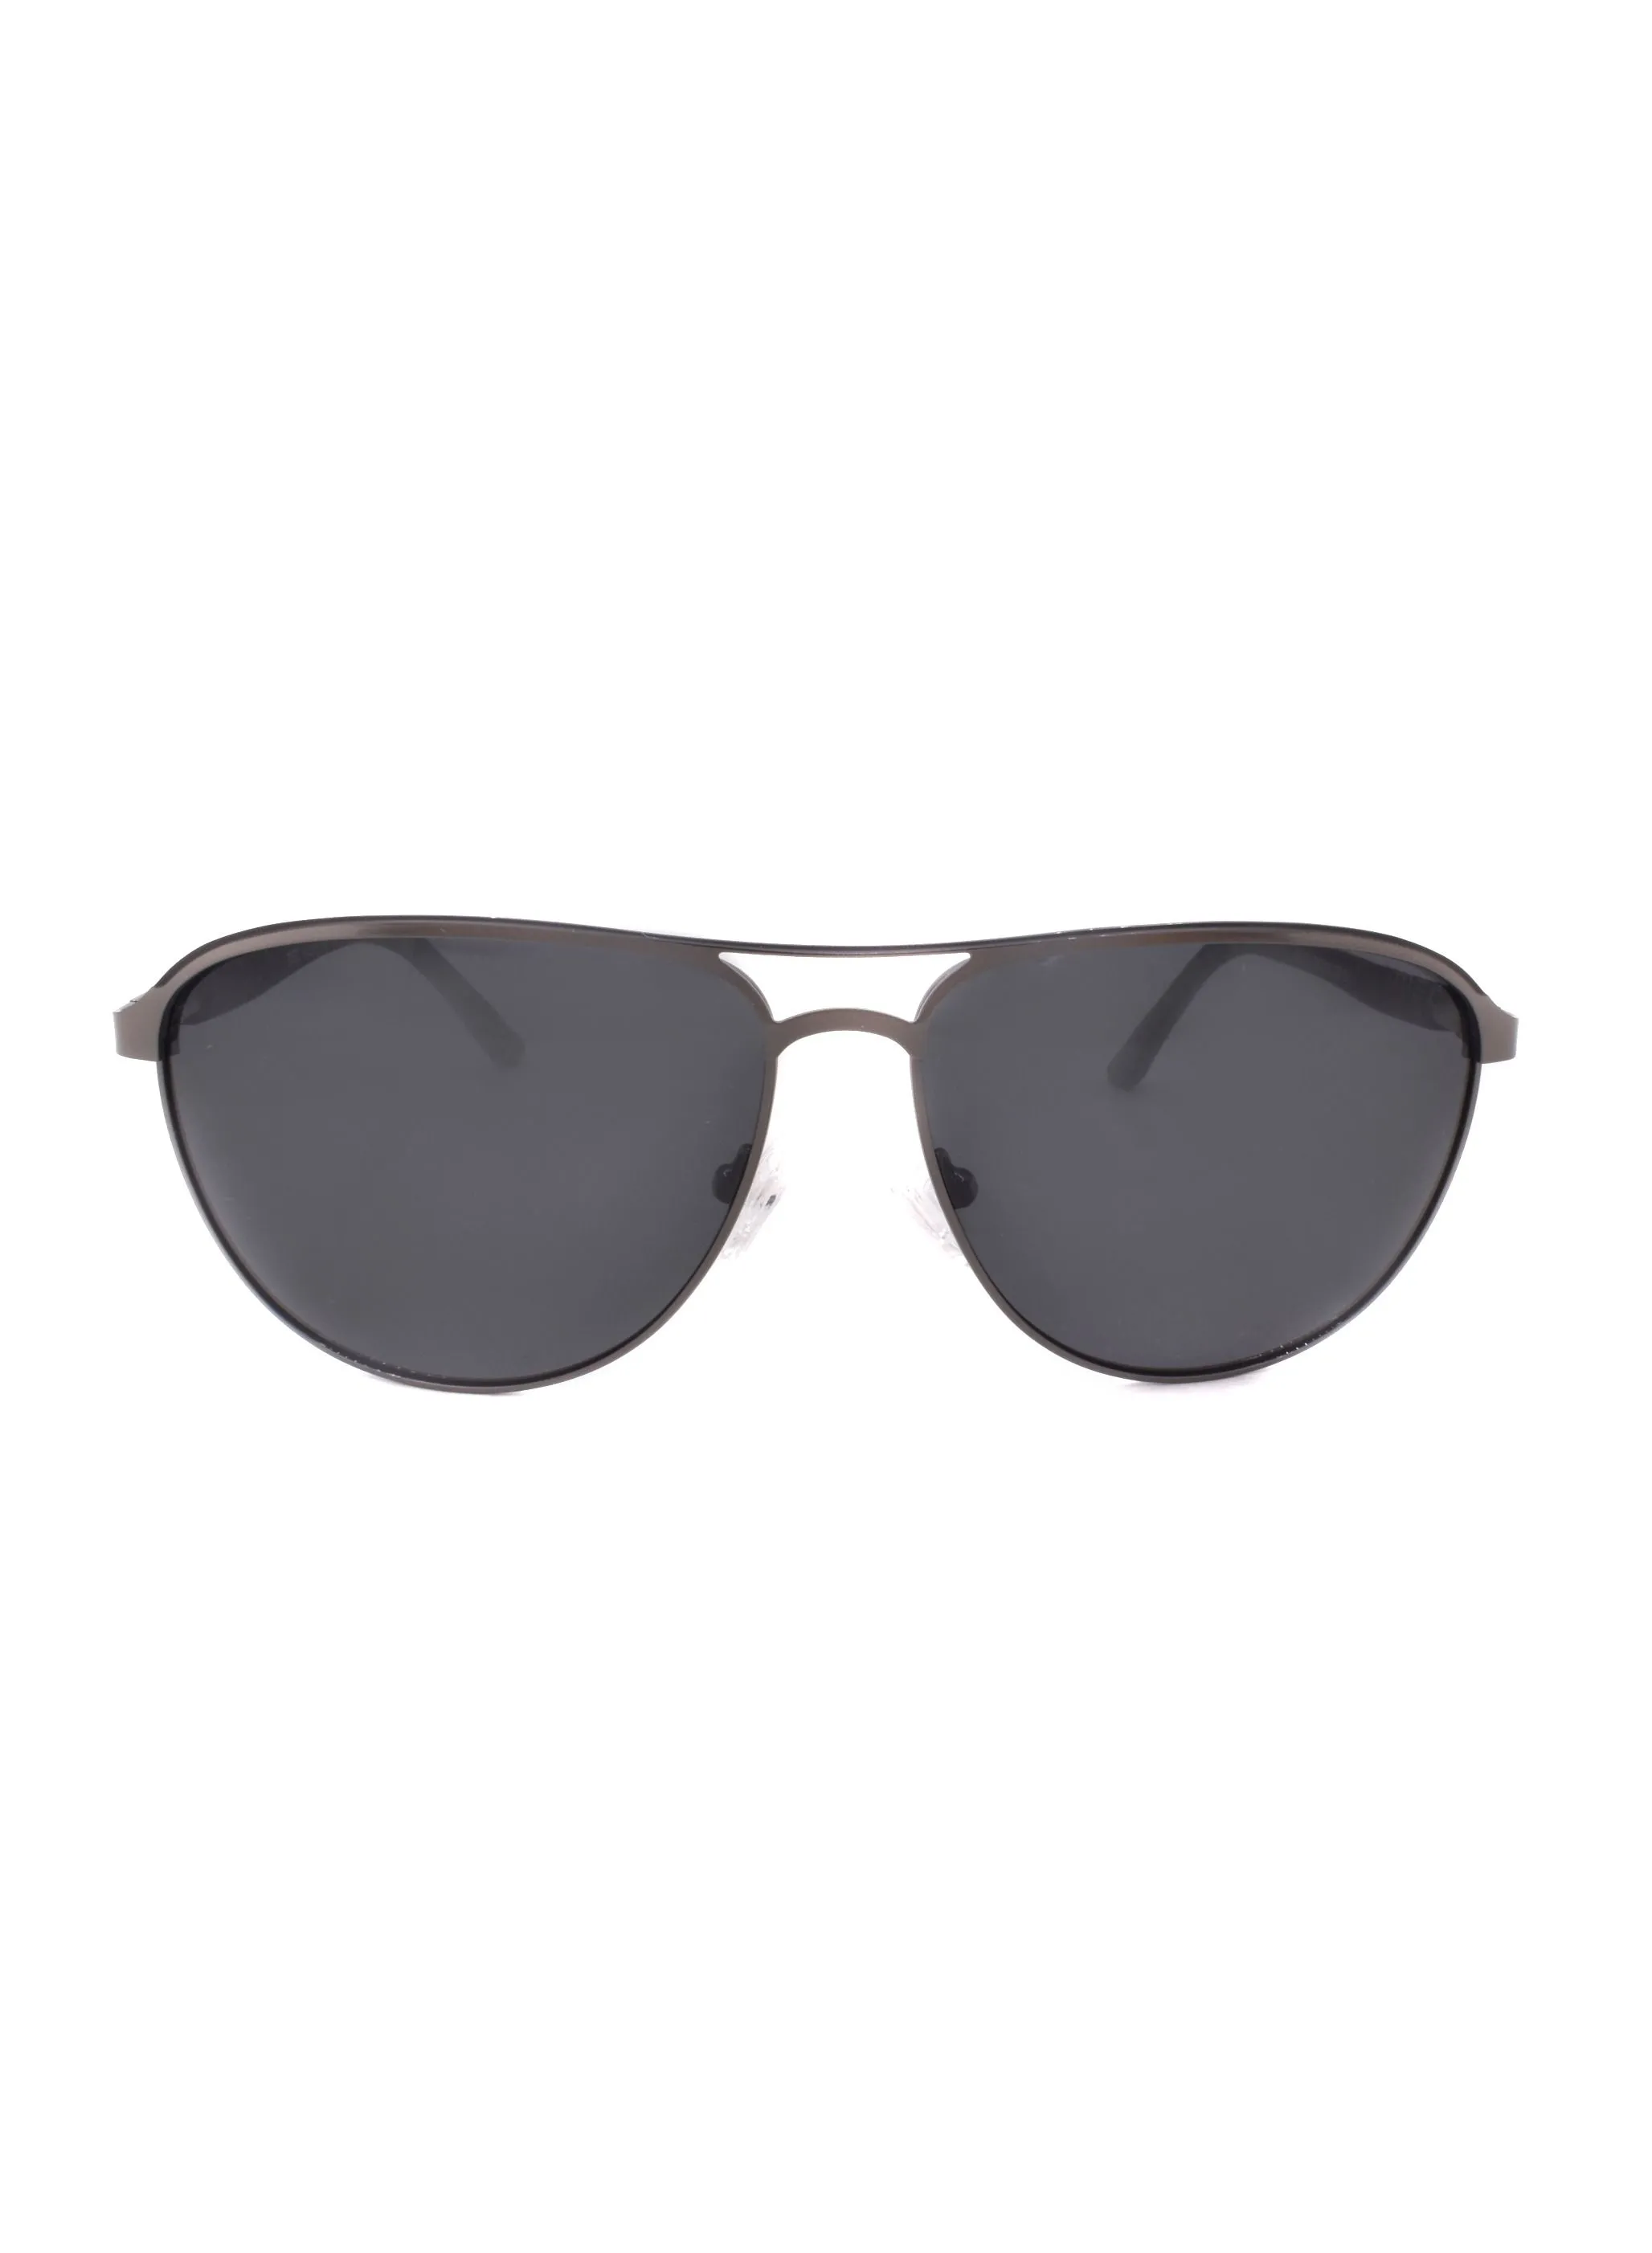 MEC Aviator Shape Sunglasses S0129-C4